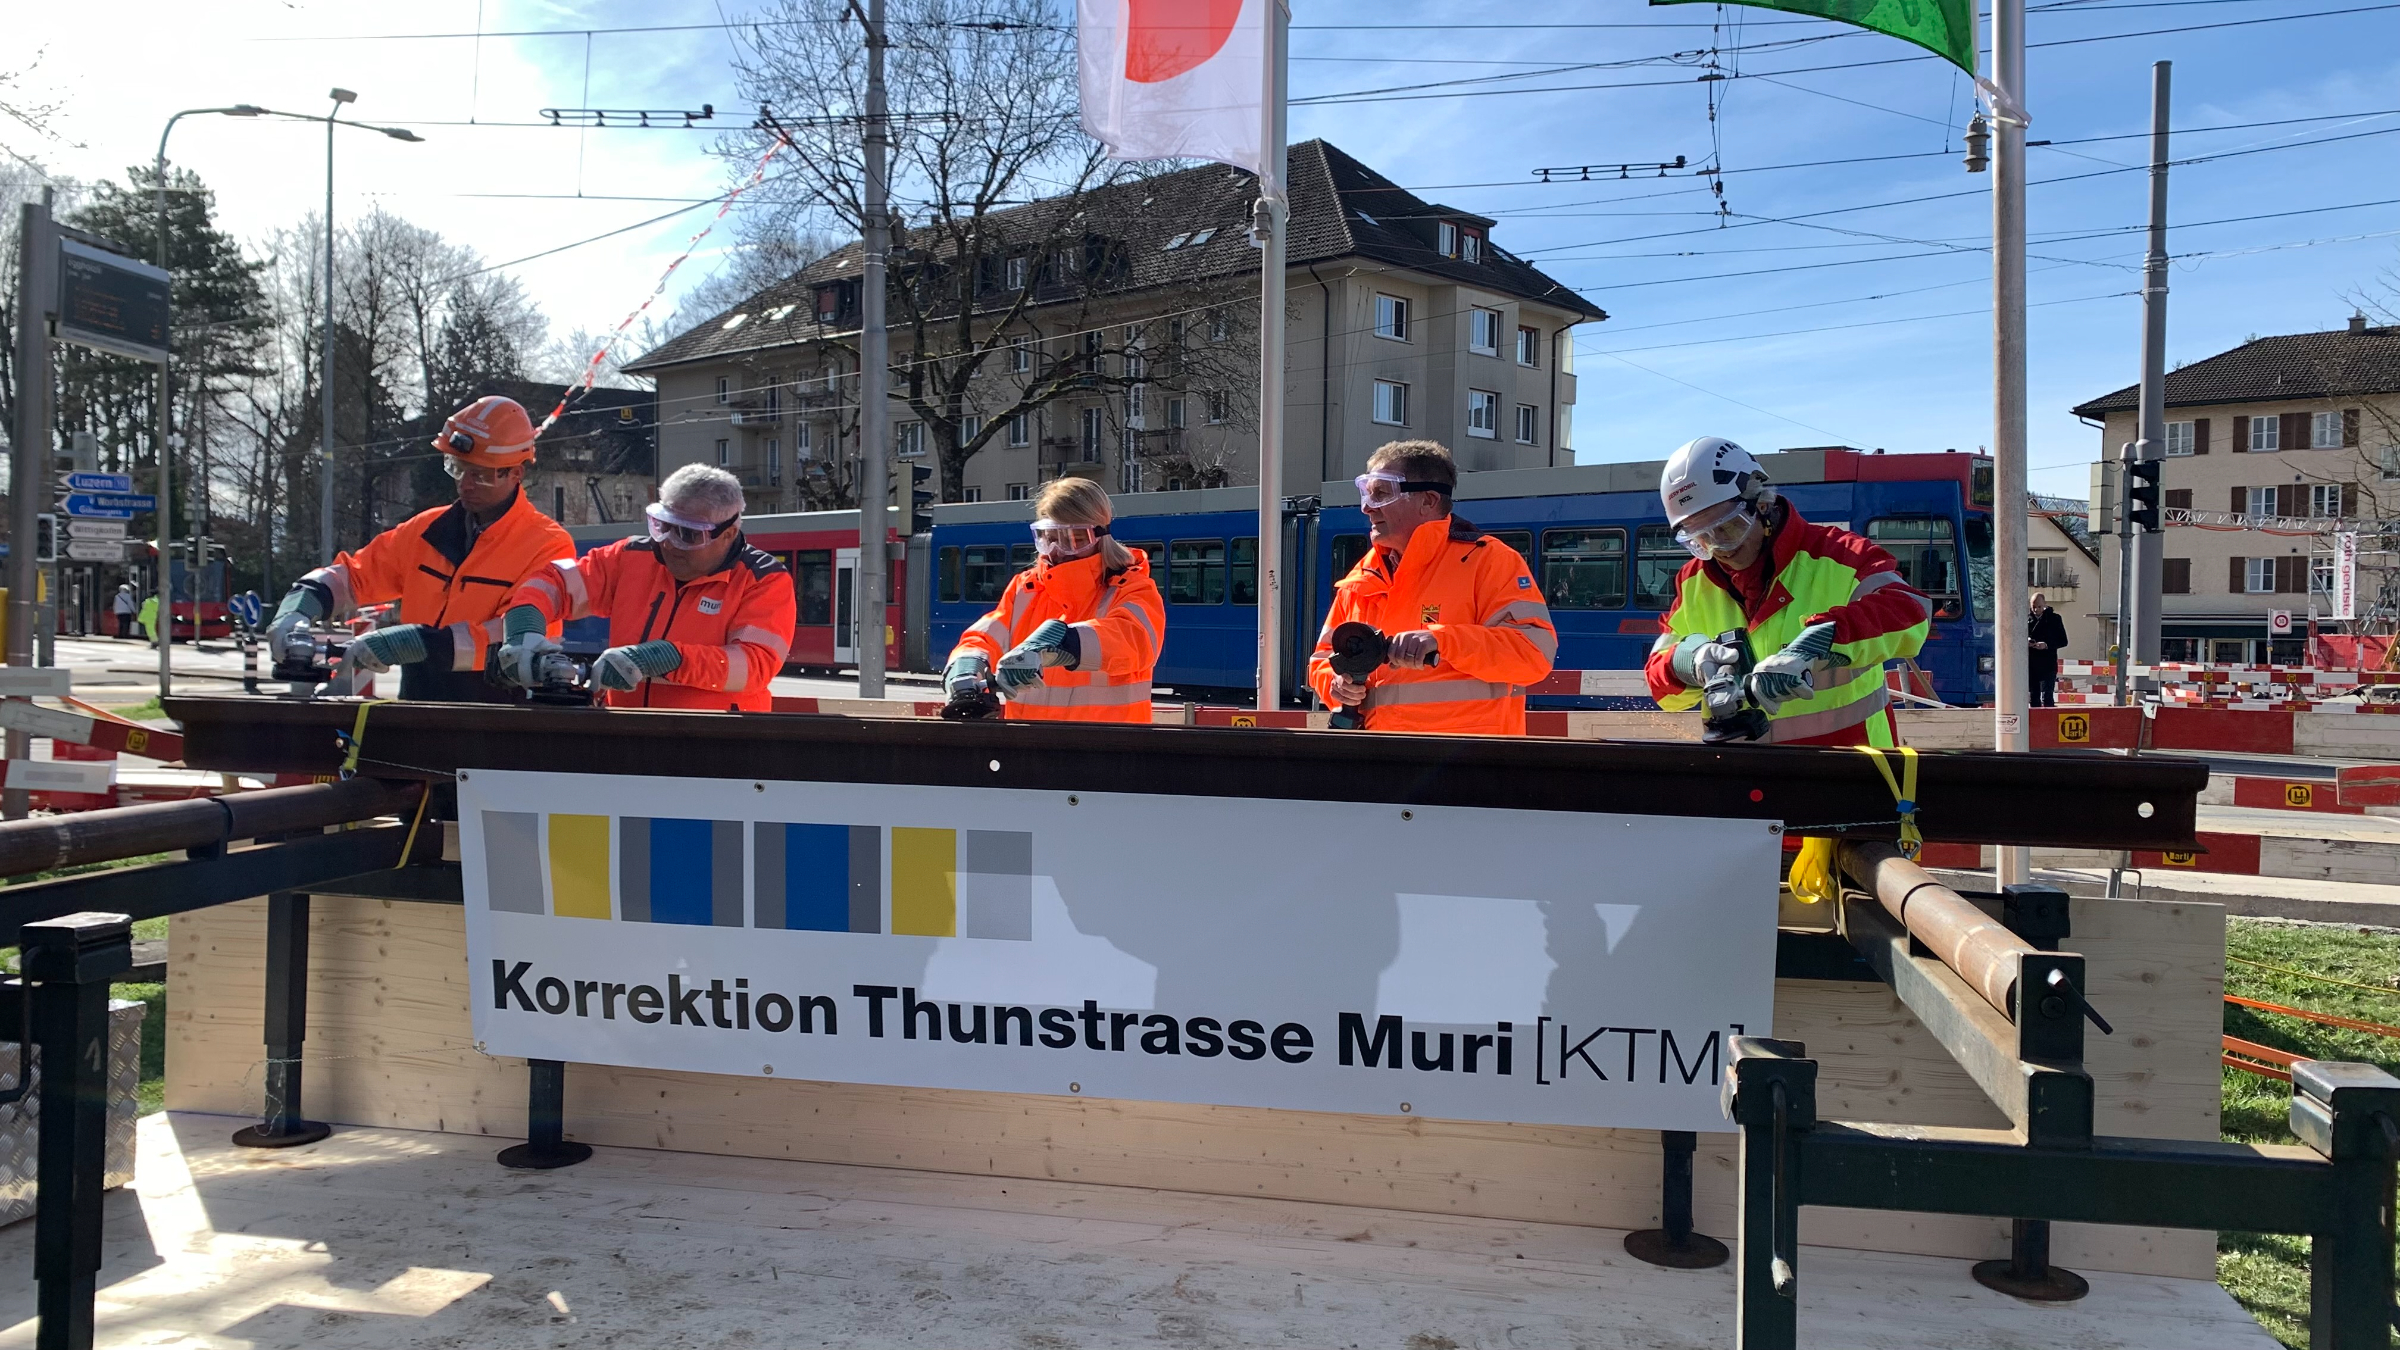 Korrektion Thunstrasse Muri (KTM)